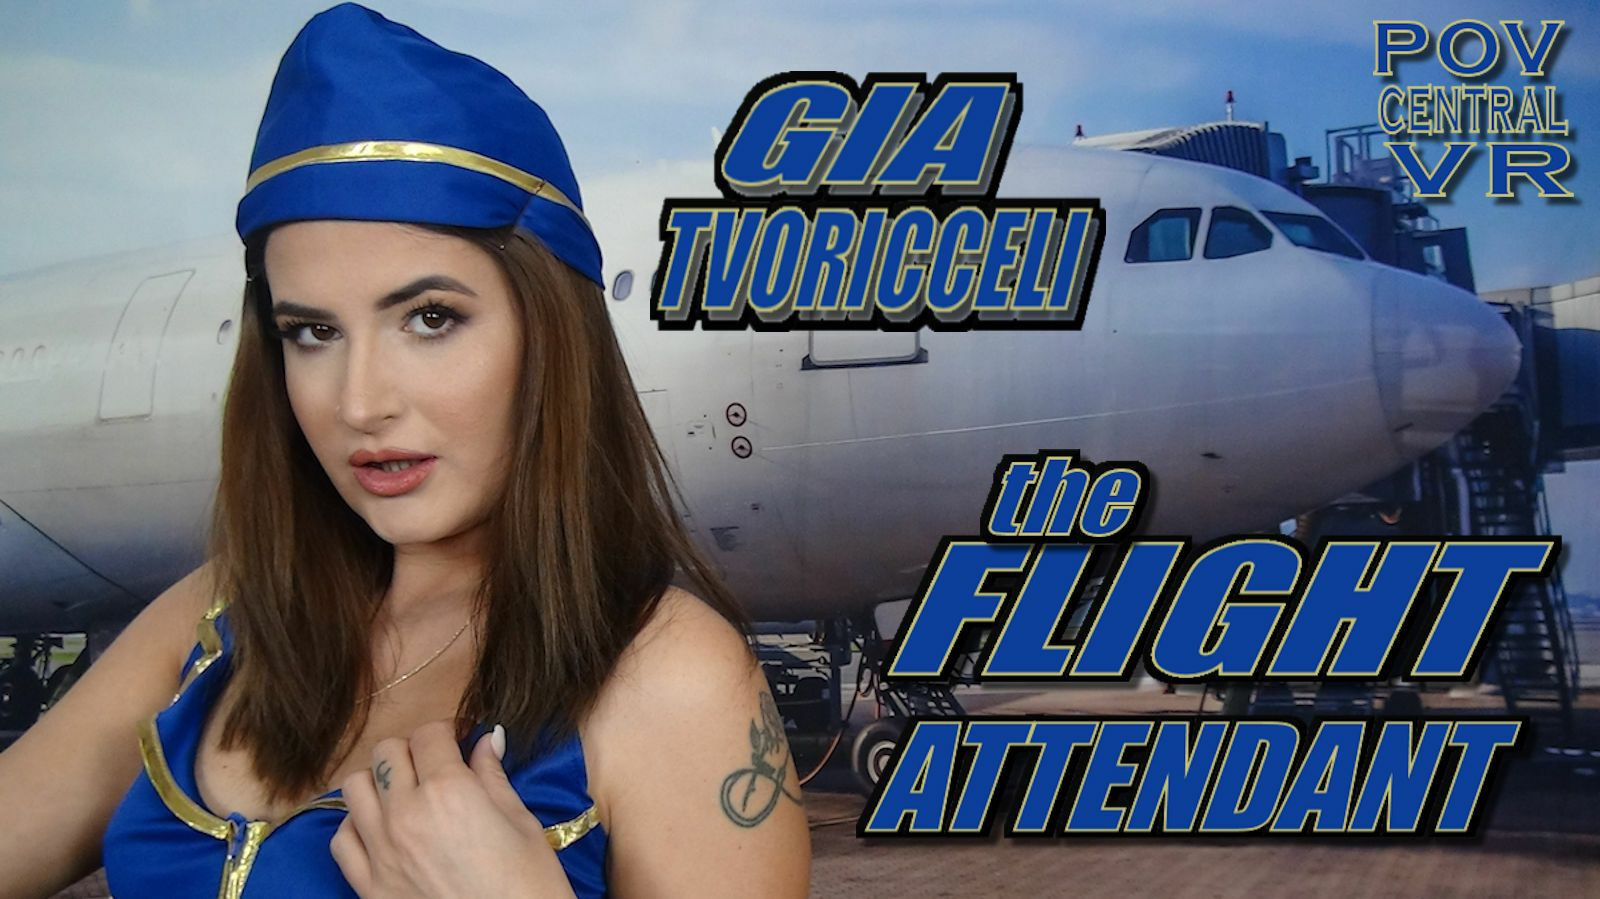 GiaTvoricceli: The Flight Attendant: Gia Tvoricceli Slideshow